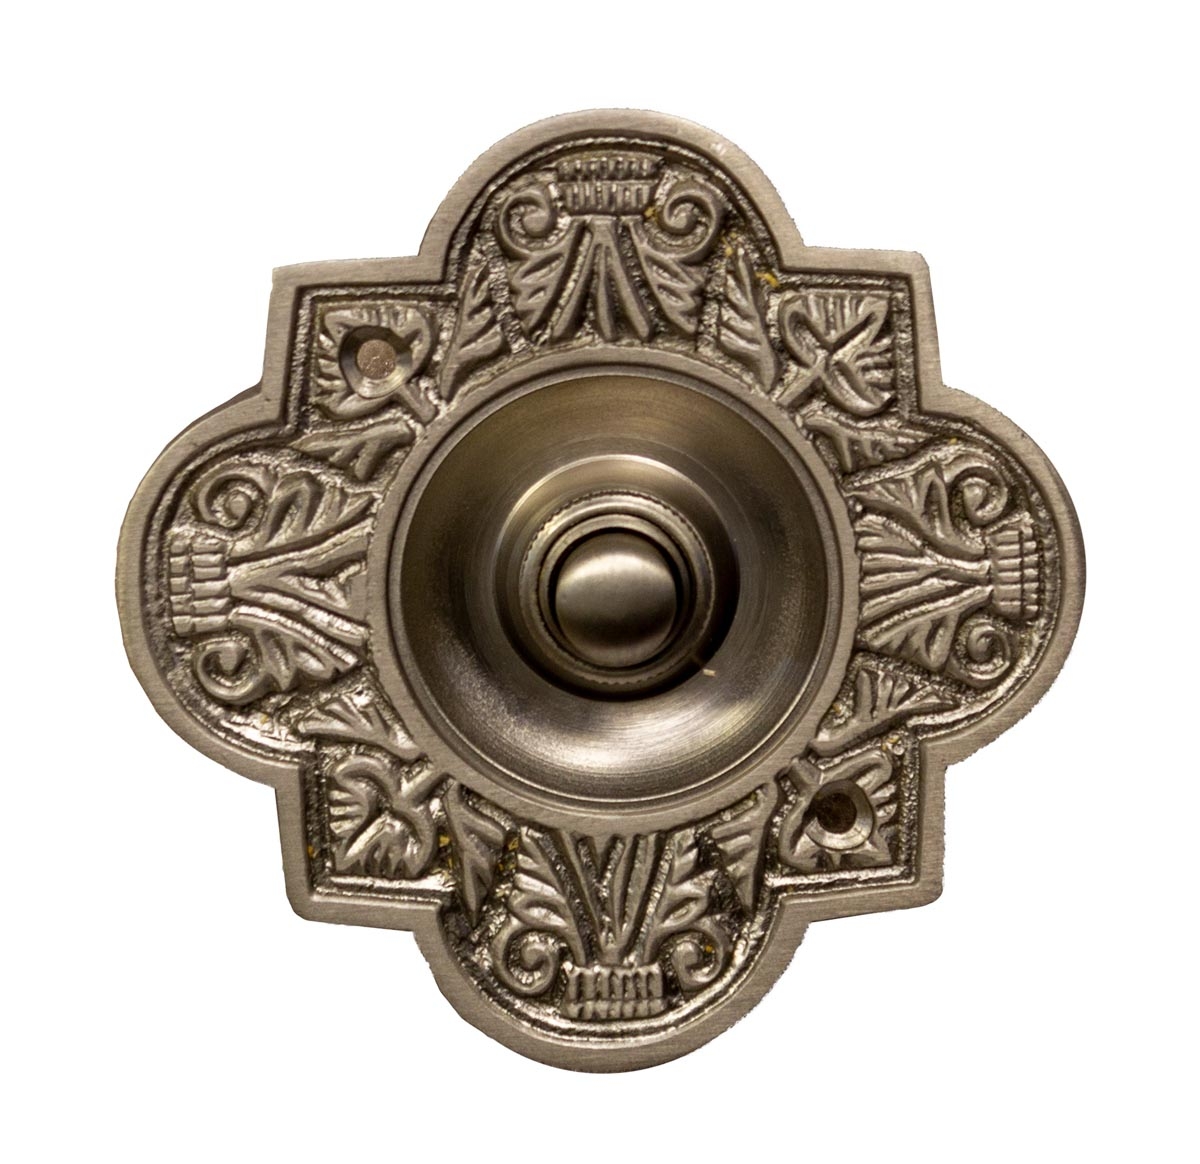 Ornate Satin Nickel Oval Doorbell Button